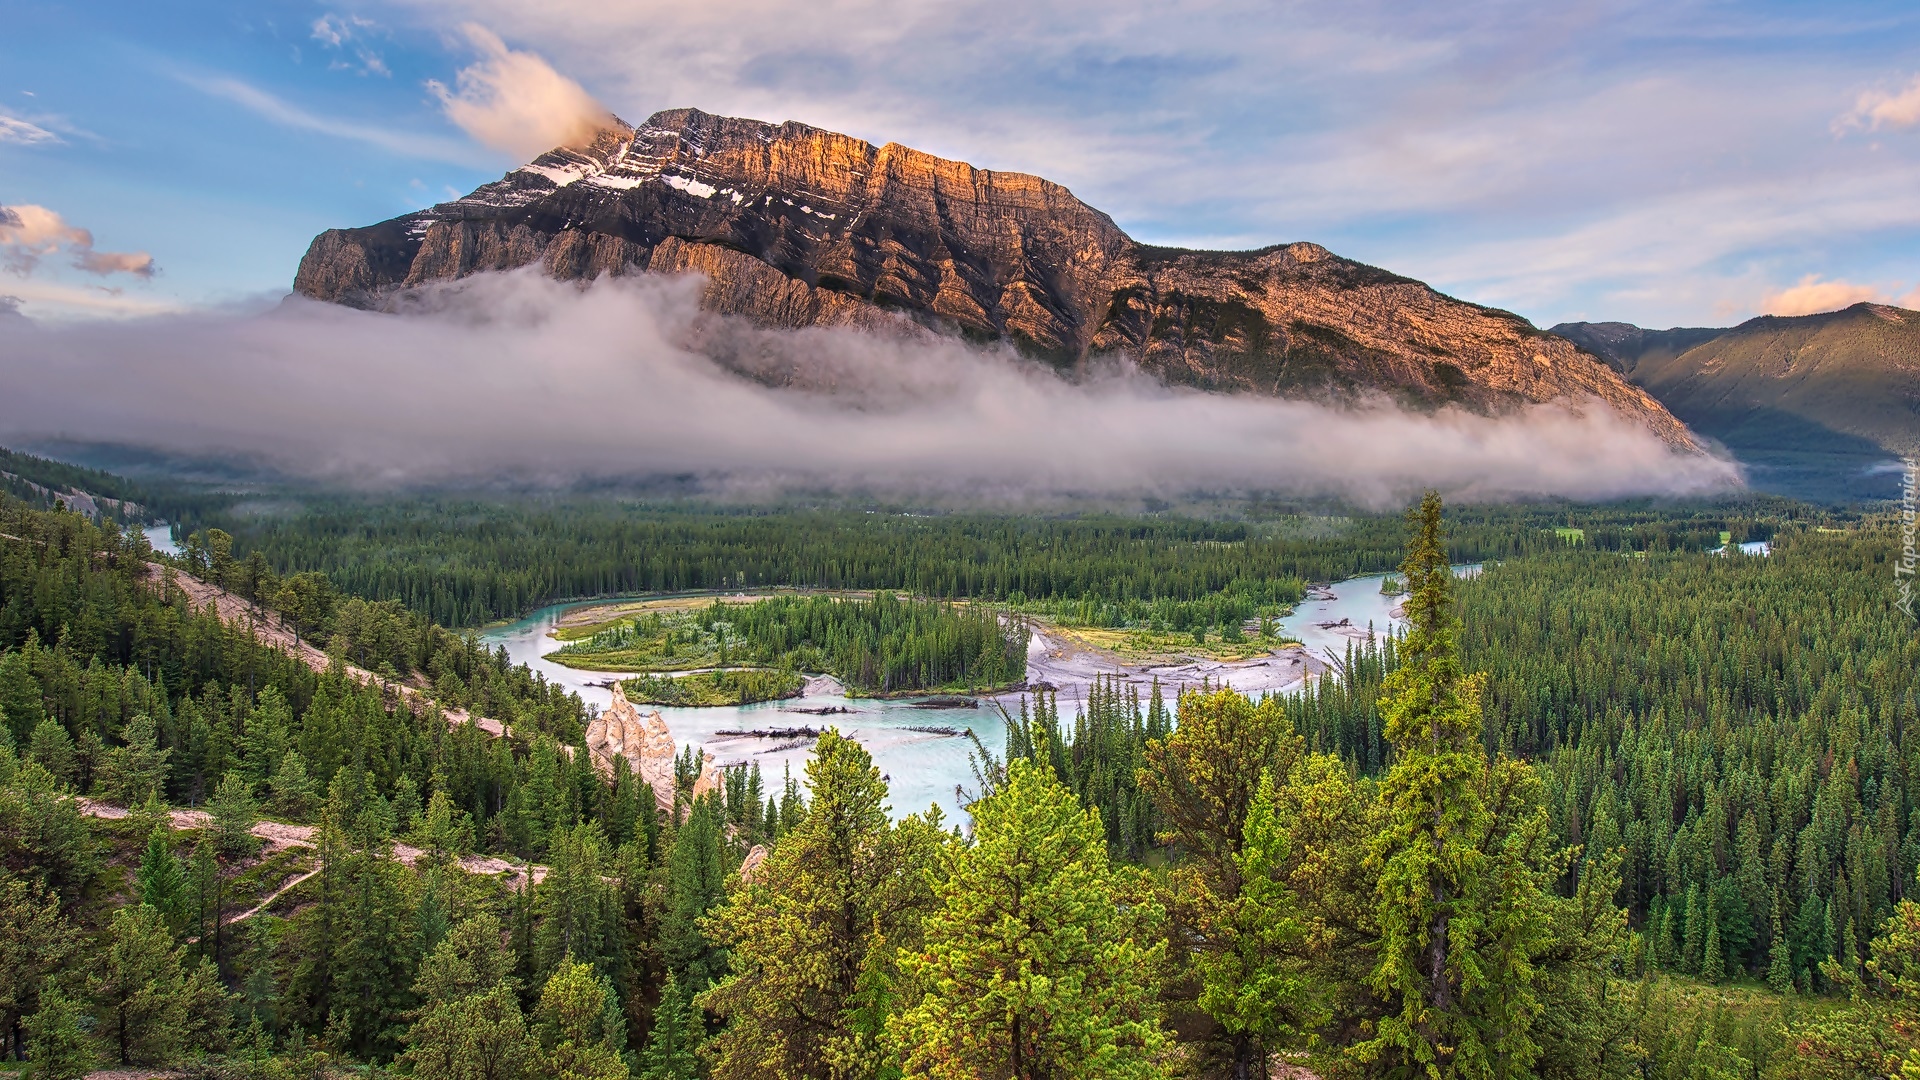 Góry, Rzeka, Bow River, Park Narodowy Banff, Alberta, Kanada, Lasy, Chmury